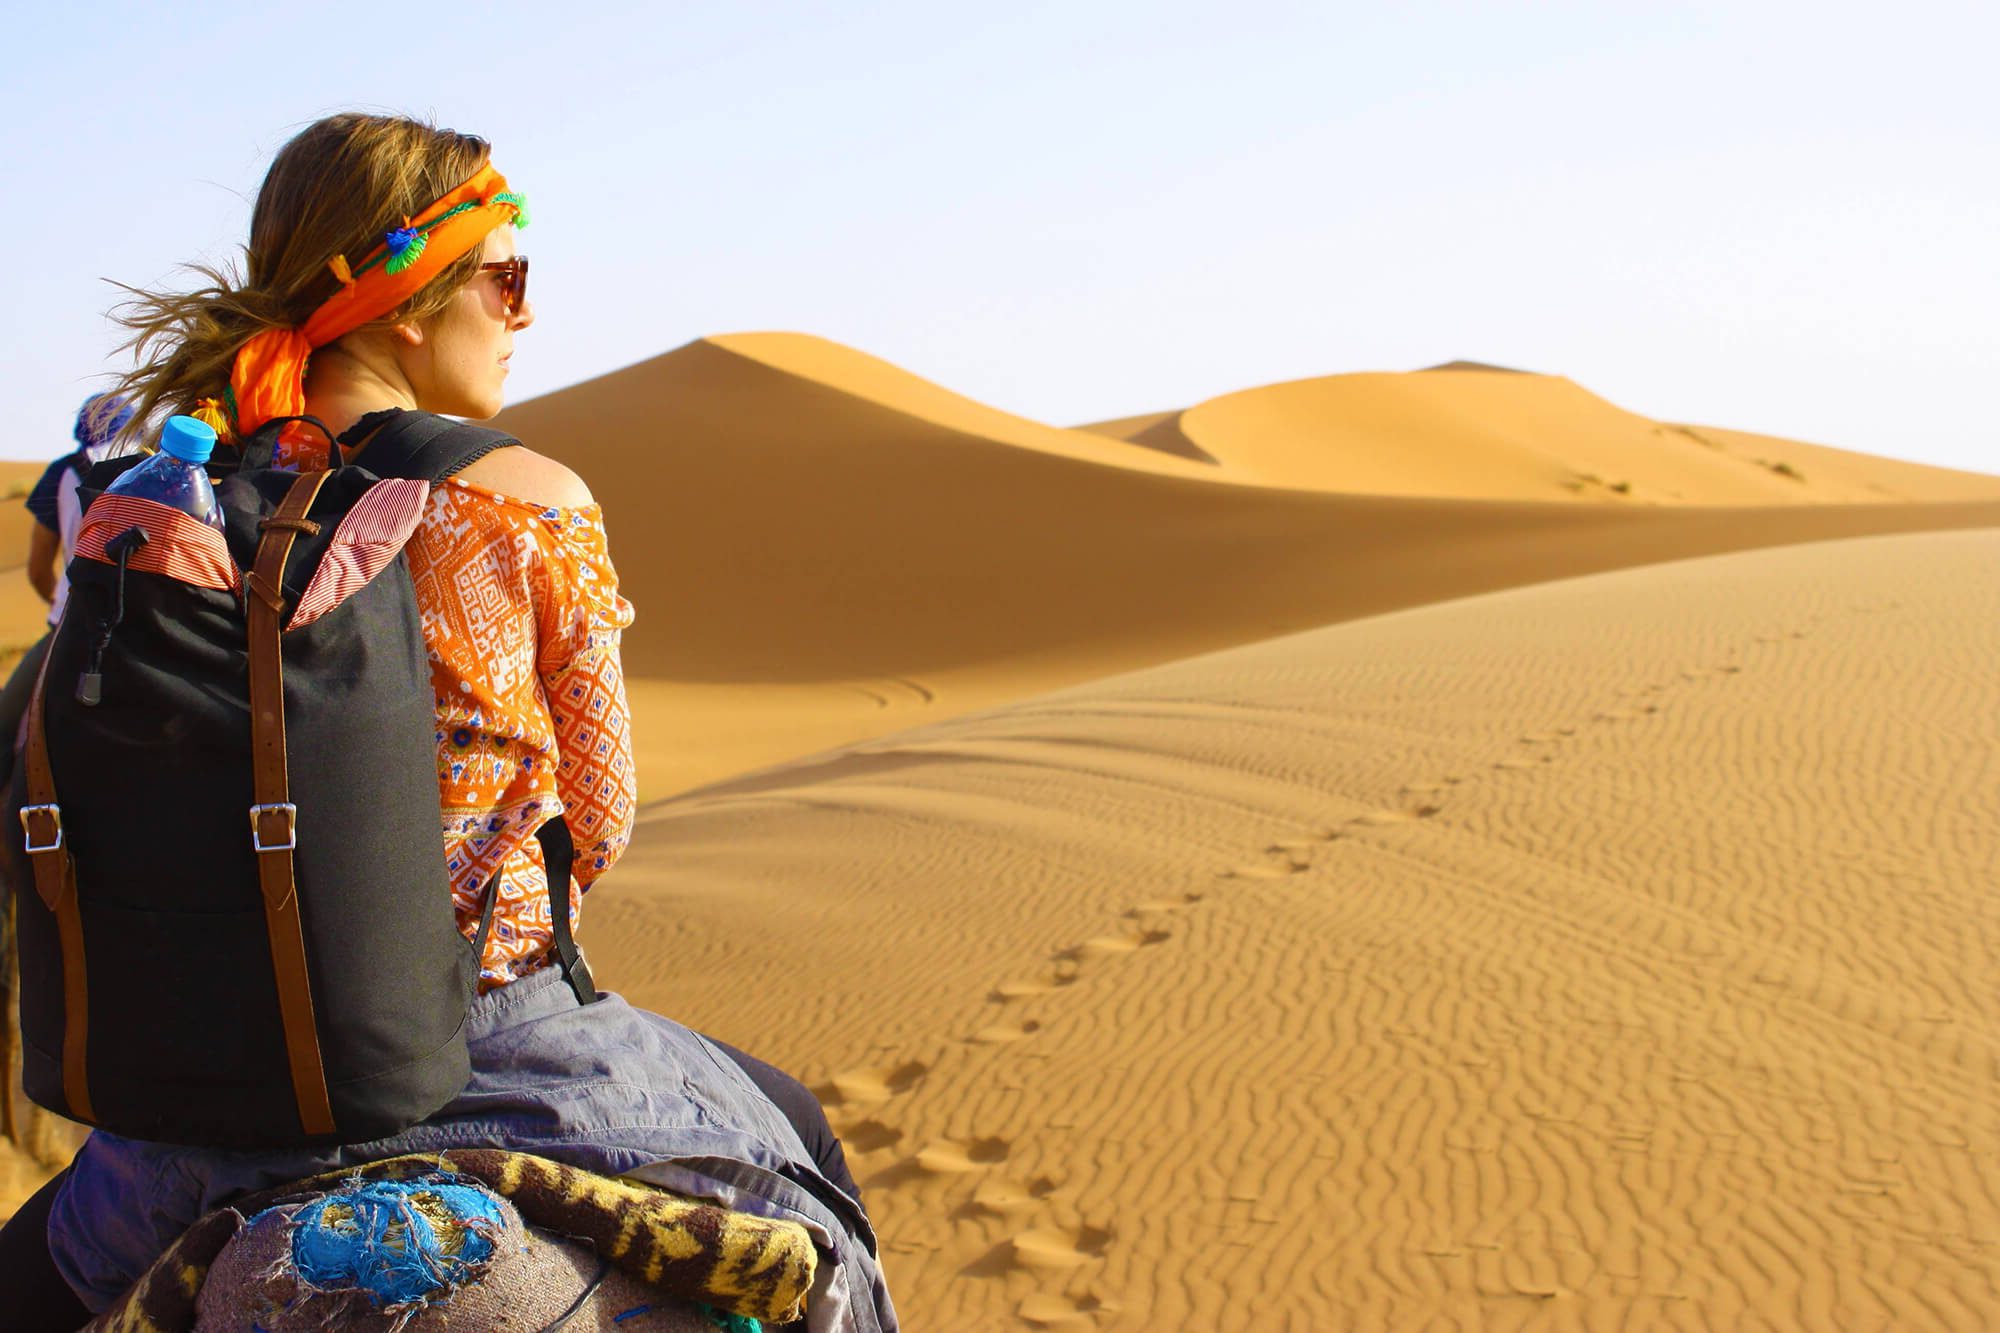 Desert Tourism Market is Going to Boom | Expedia, Fareportal, AAA Travel